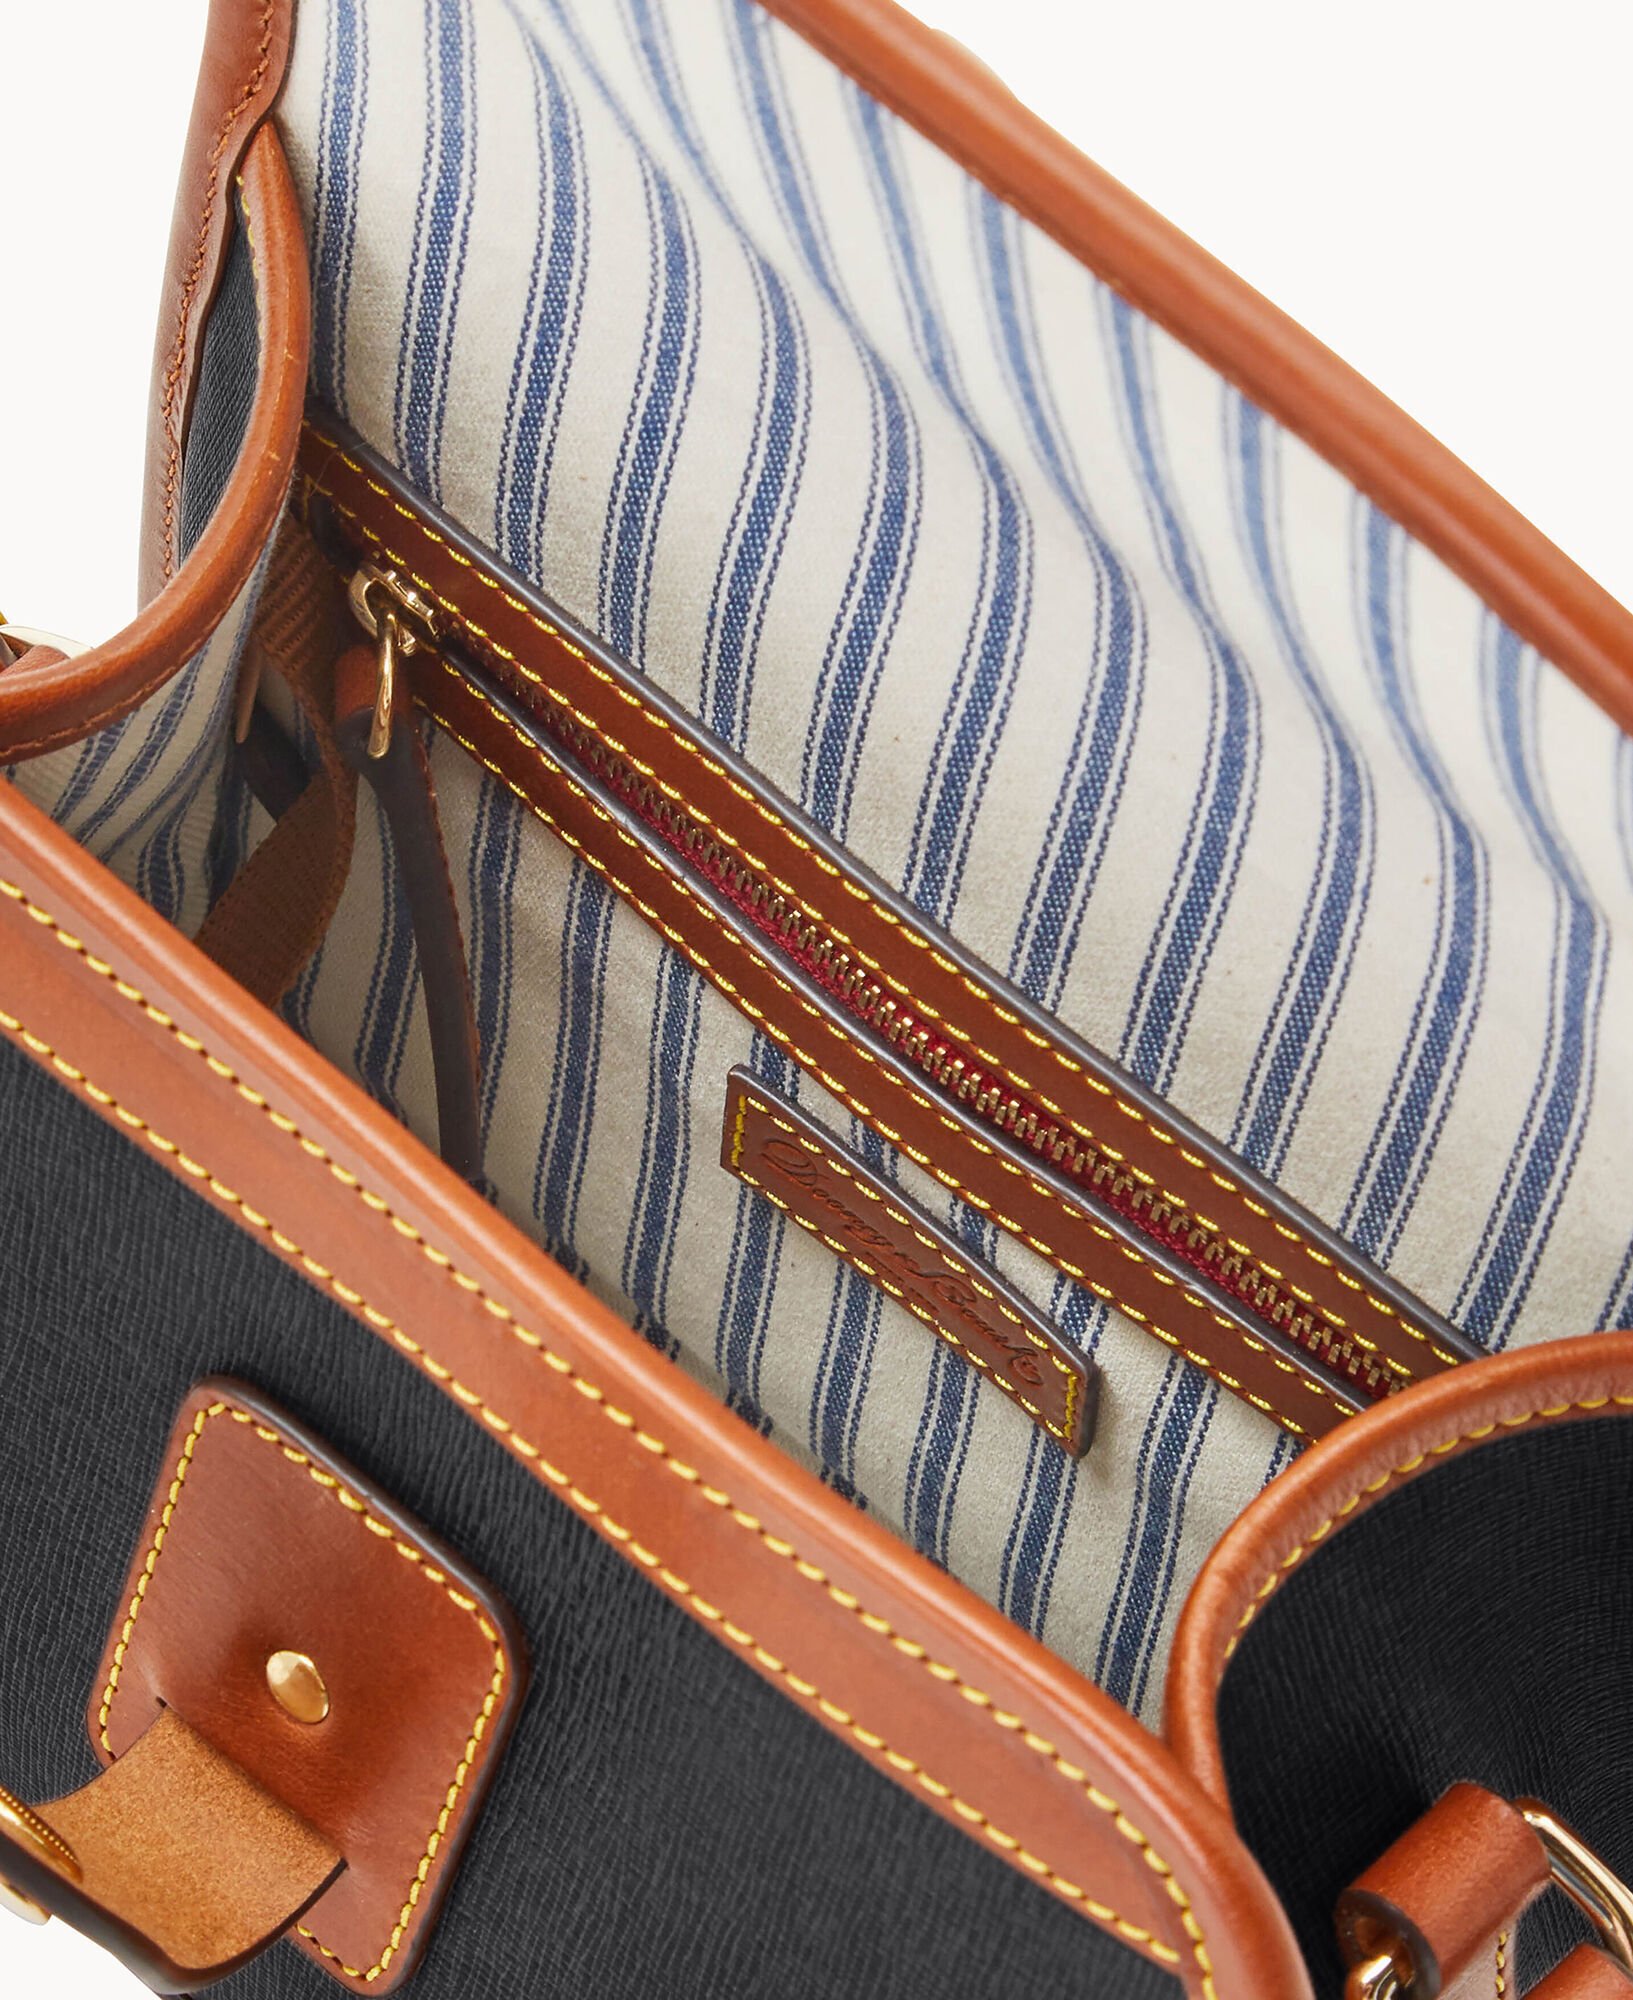 Dooney & Bourke Saffiano Leather Flap Crossbody Bag